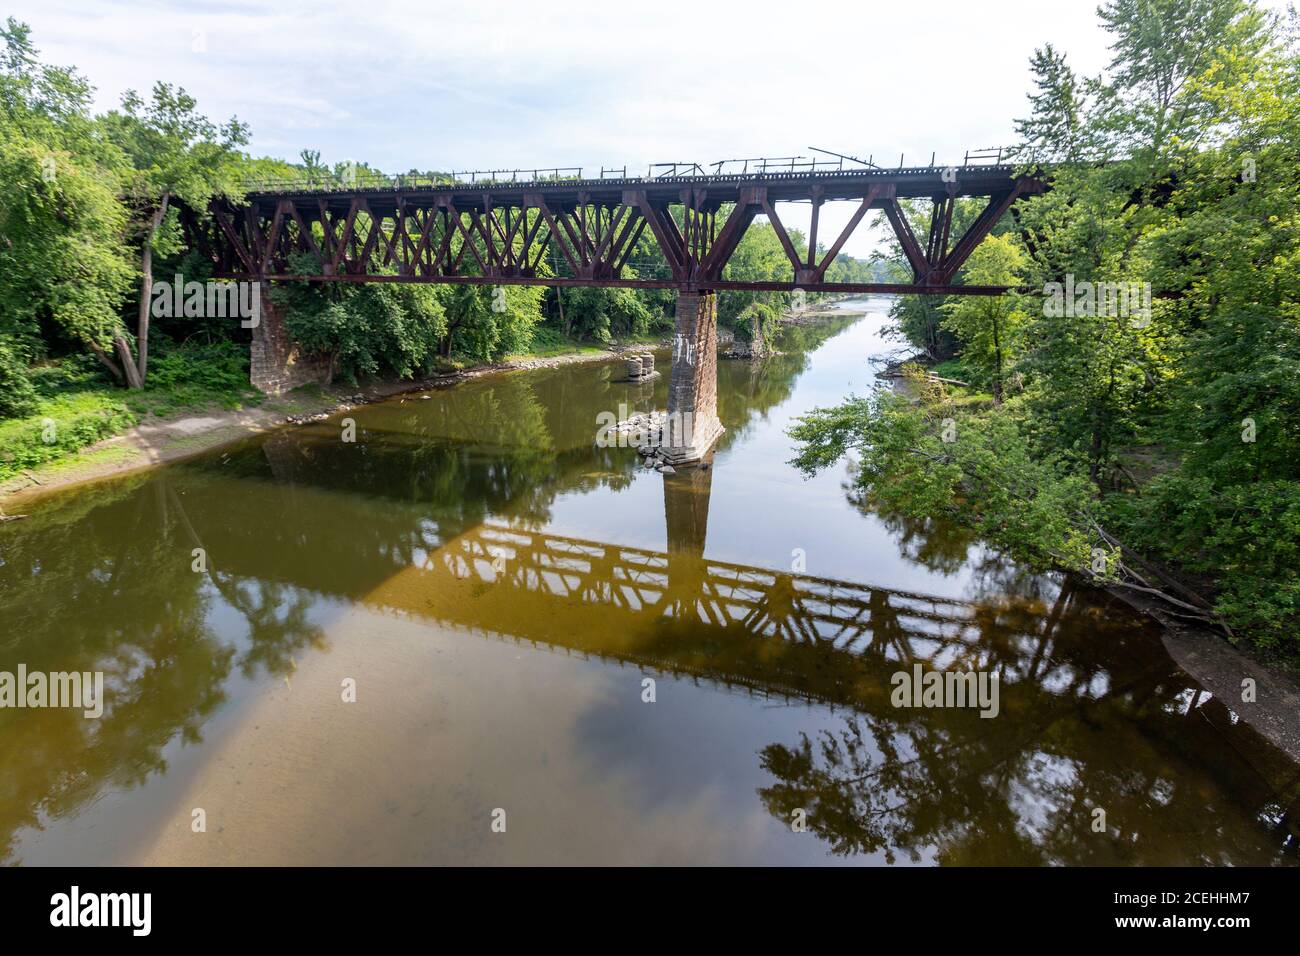 Railroad bridge crossing Deerfield river, Deerfield, Massachusetts, USA Stock Photo